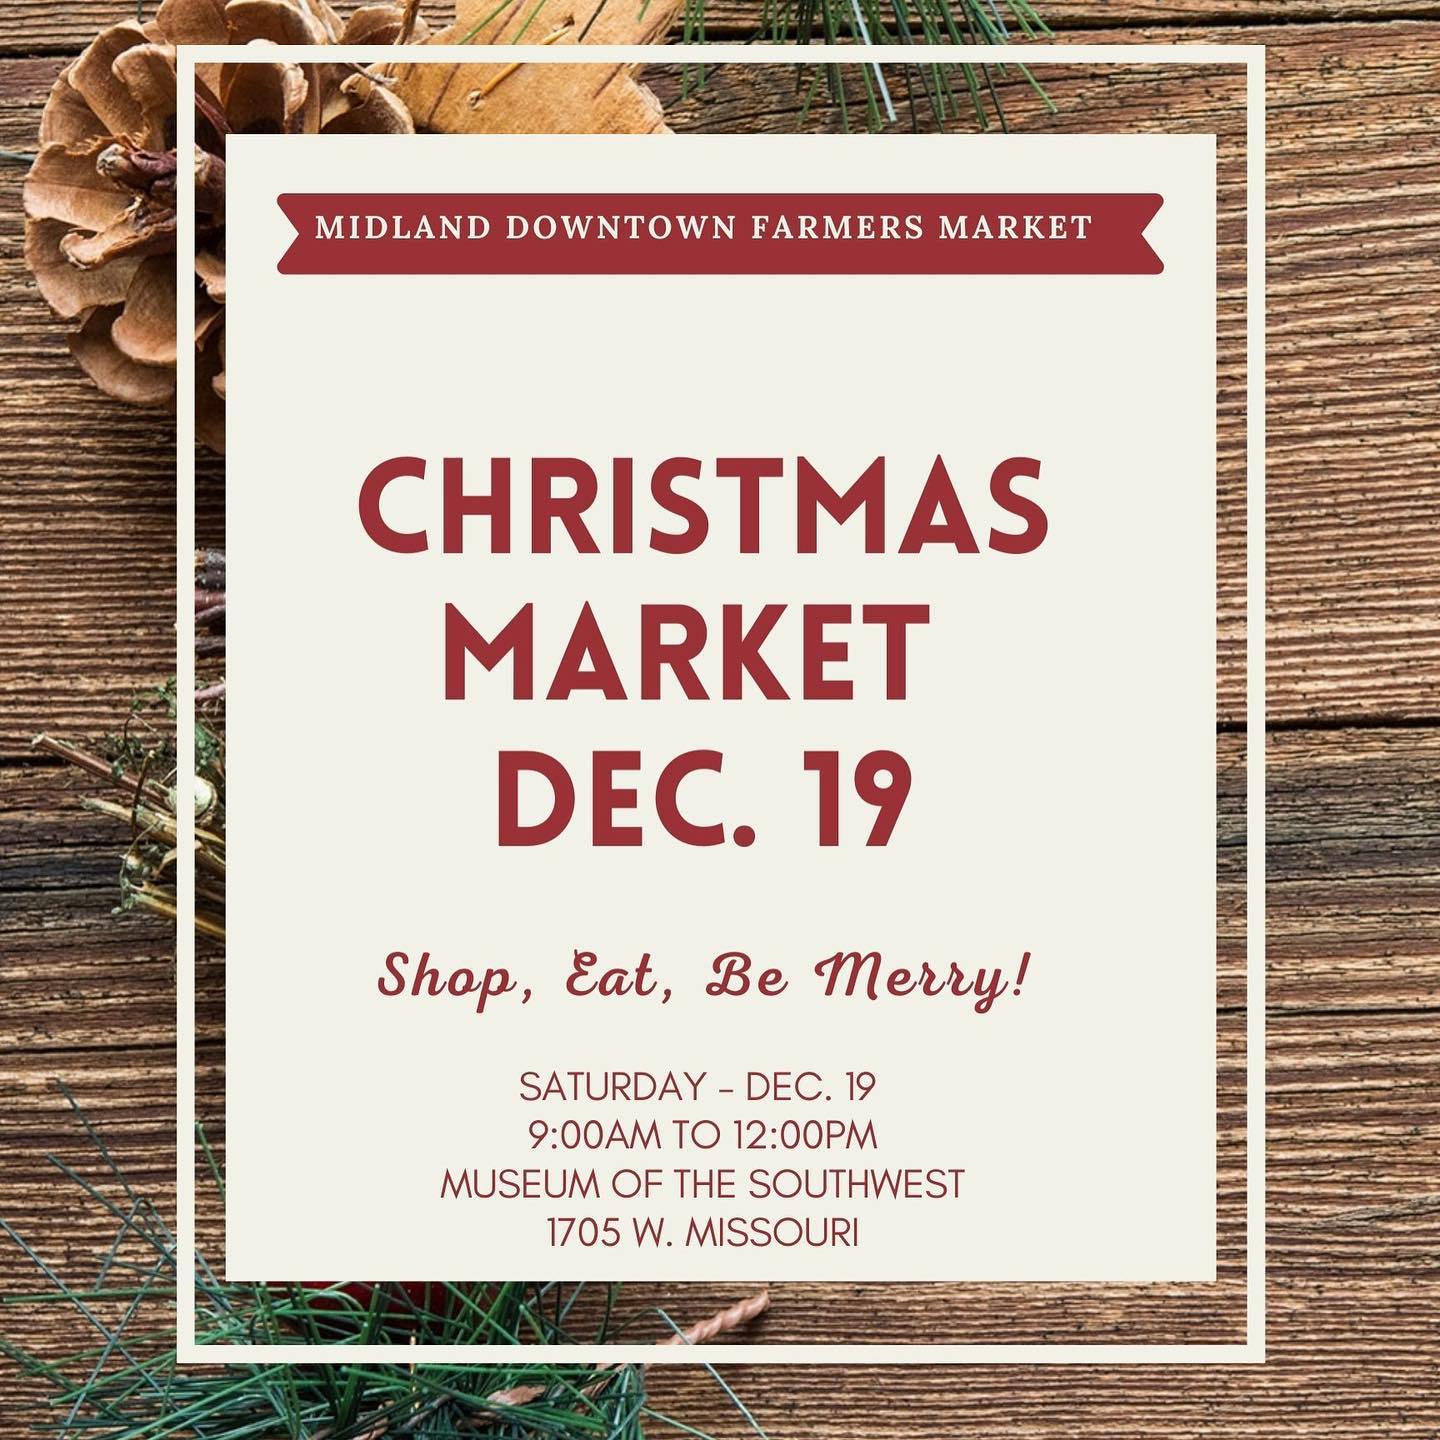 Saturdays at Midland Downtown Farmers Market – December 19th